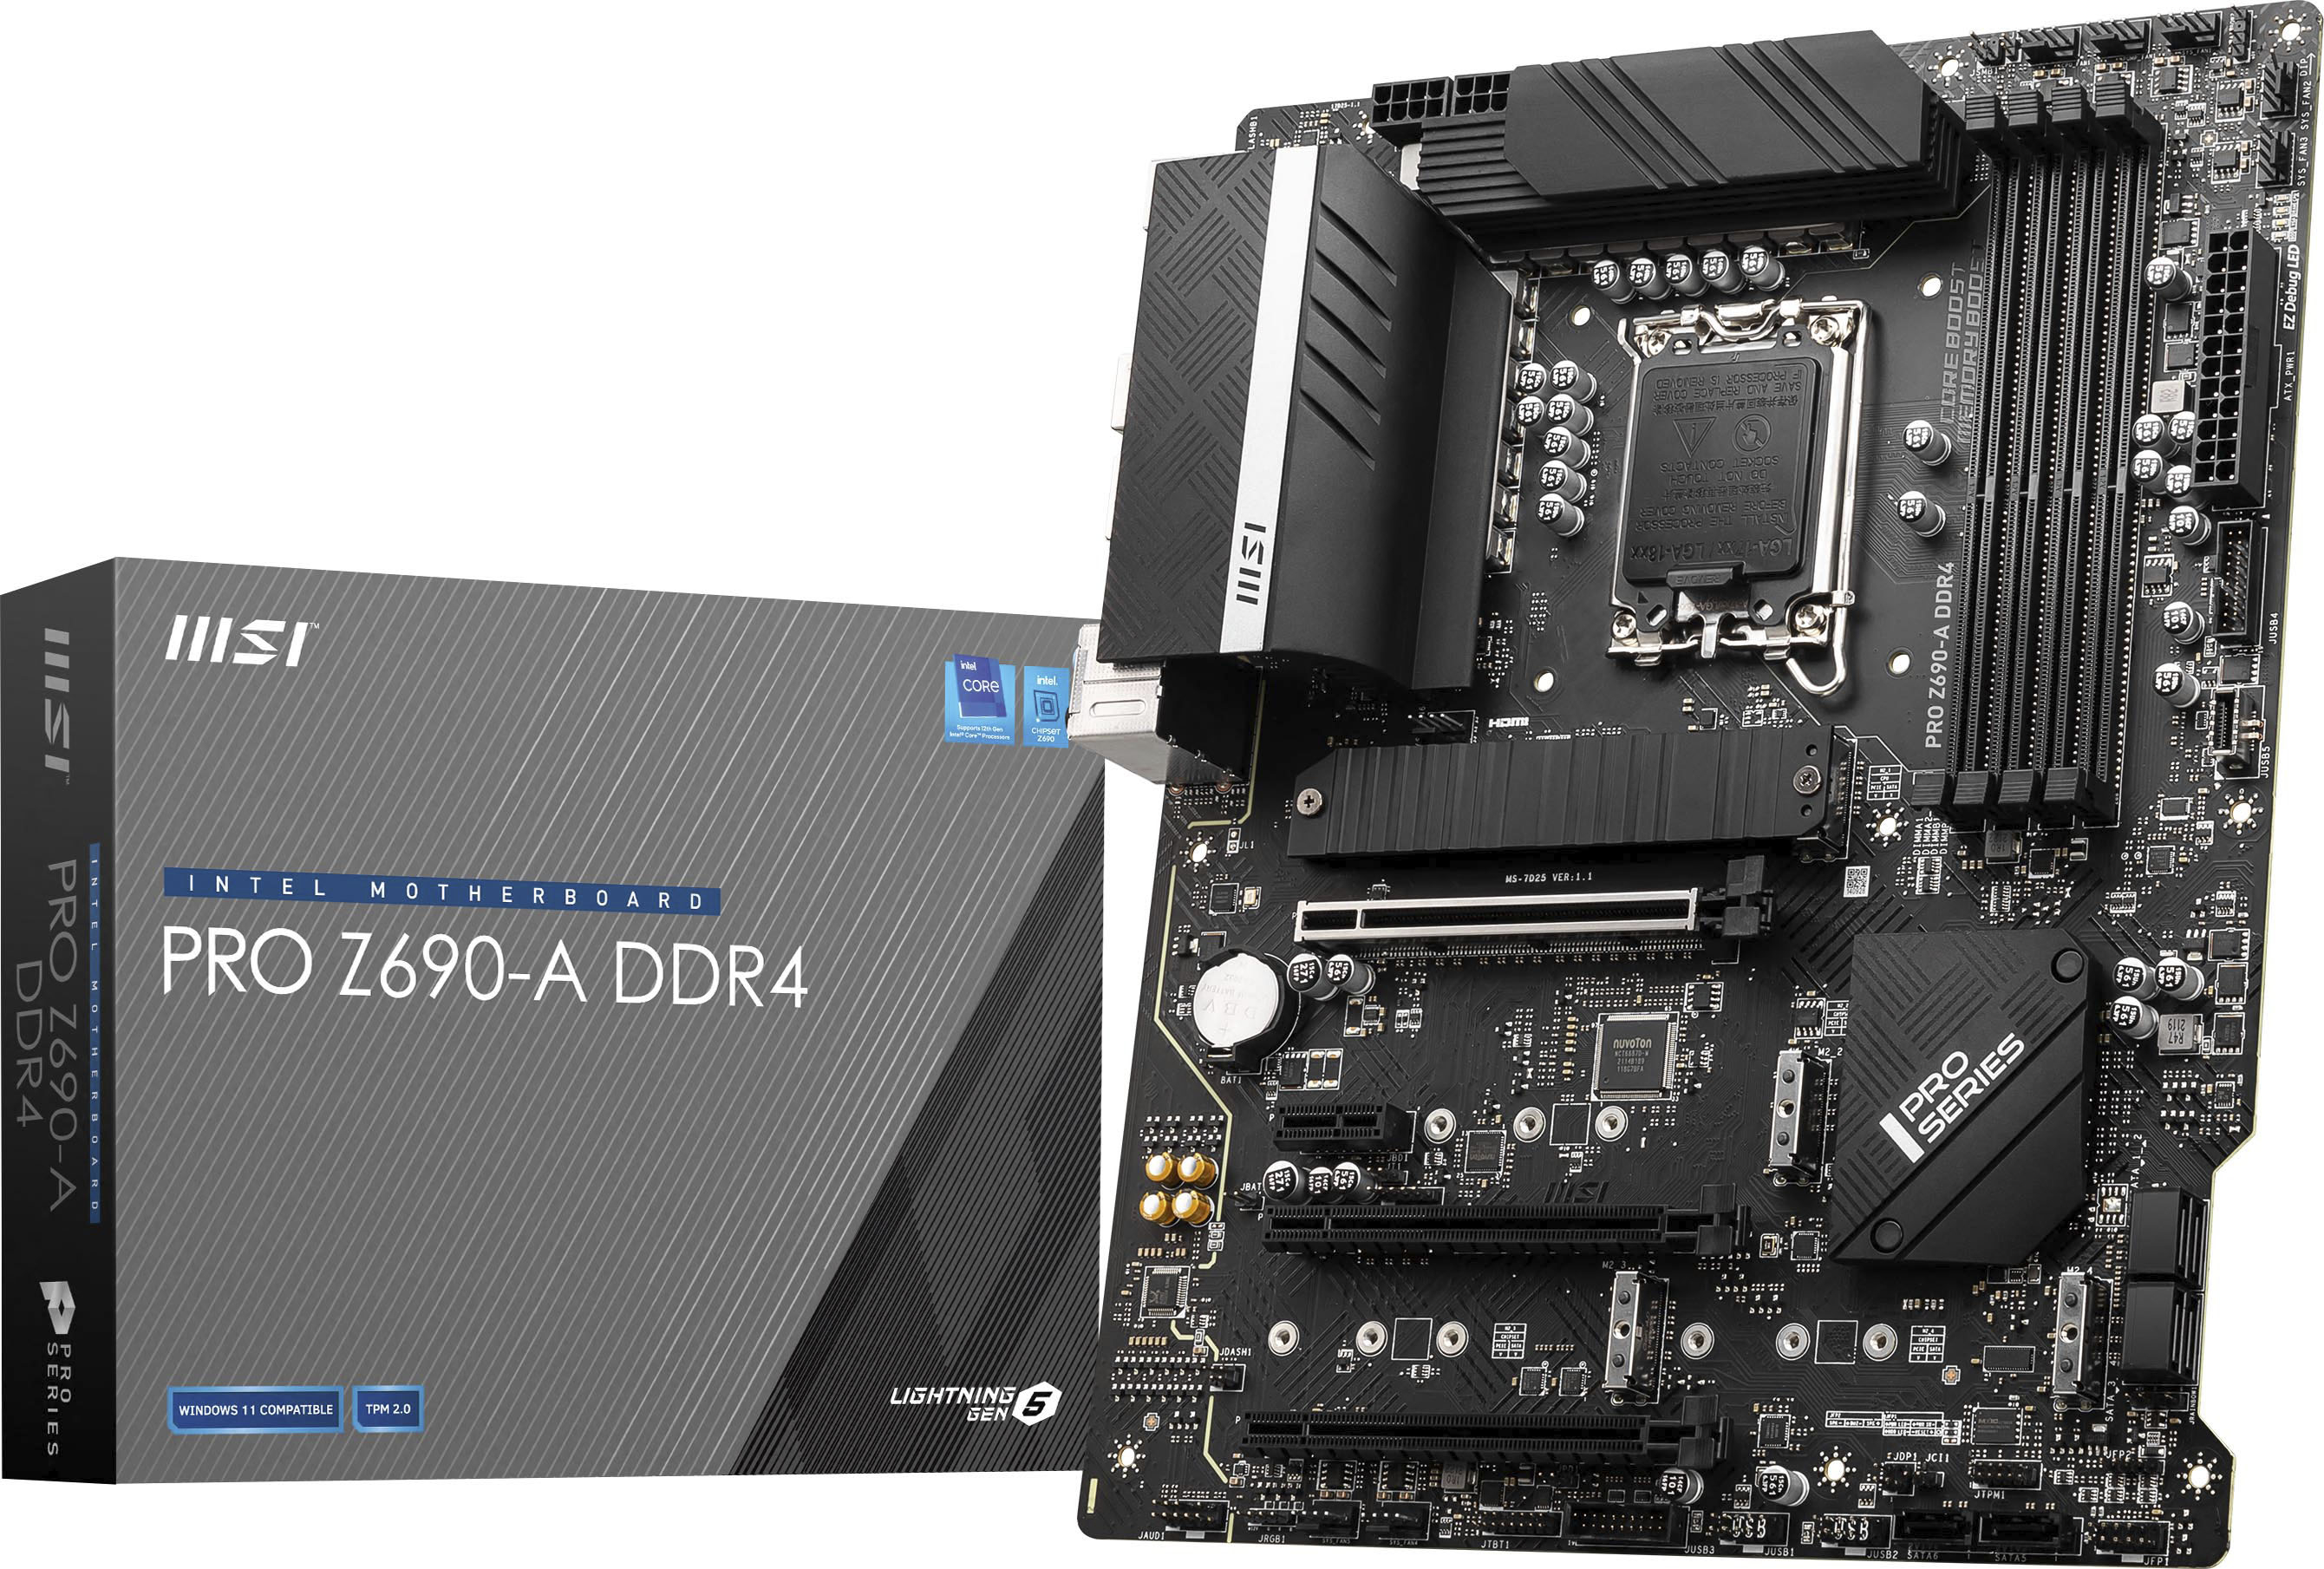 Intel LGA 1700 Socket Pictured, Cooler Installation Detailed